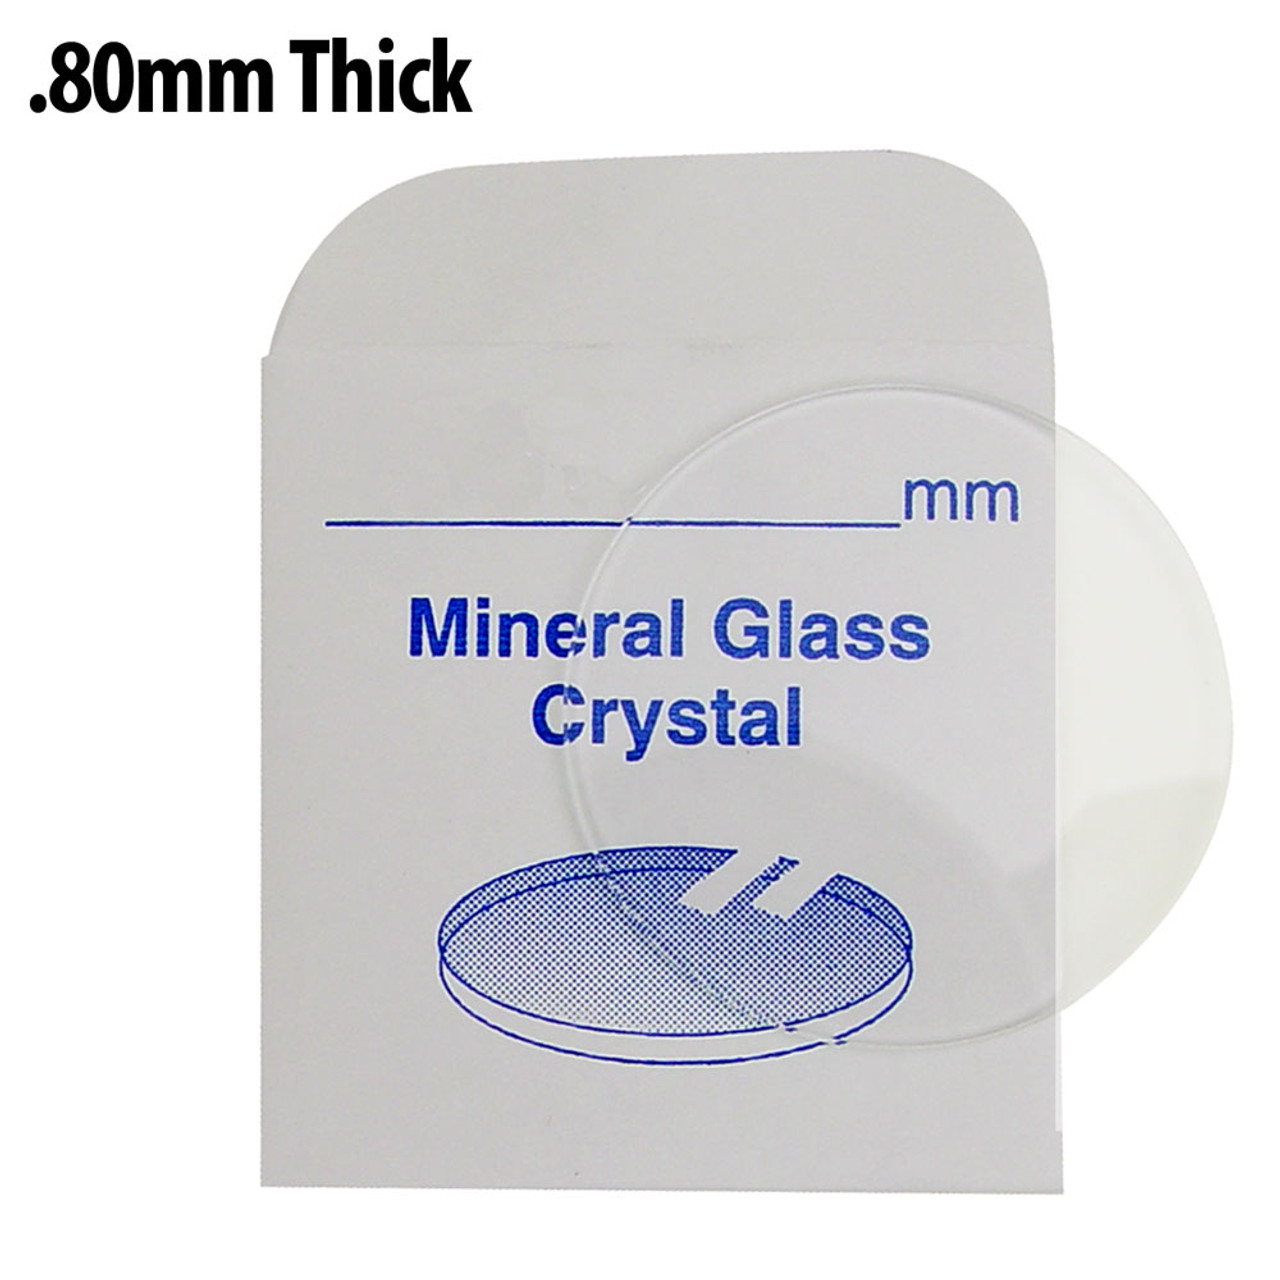 GS Crystal Hypo Cement Watch Crystal Glue - Watch Crystal Tools